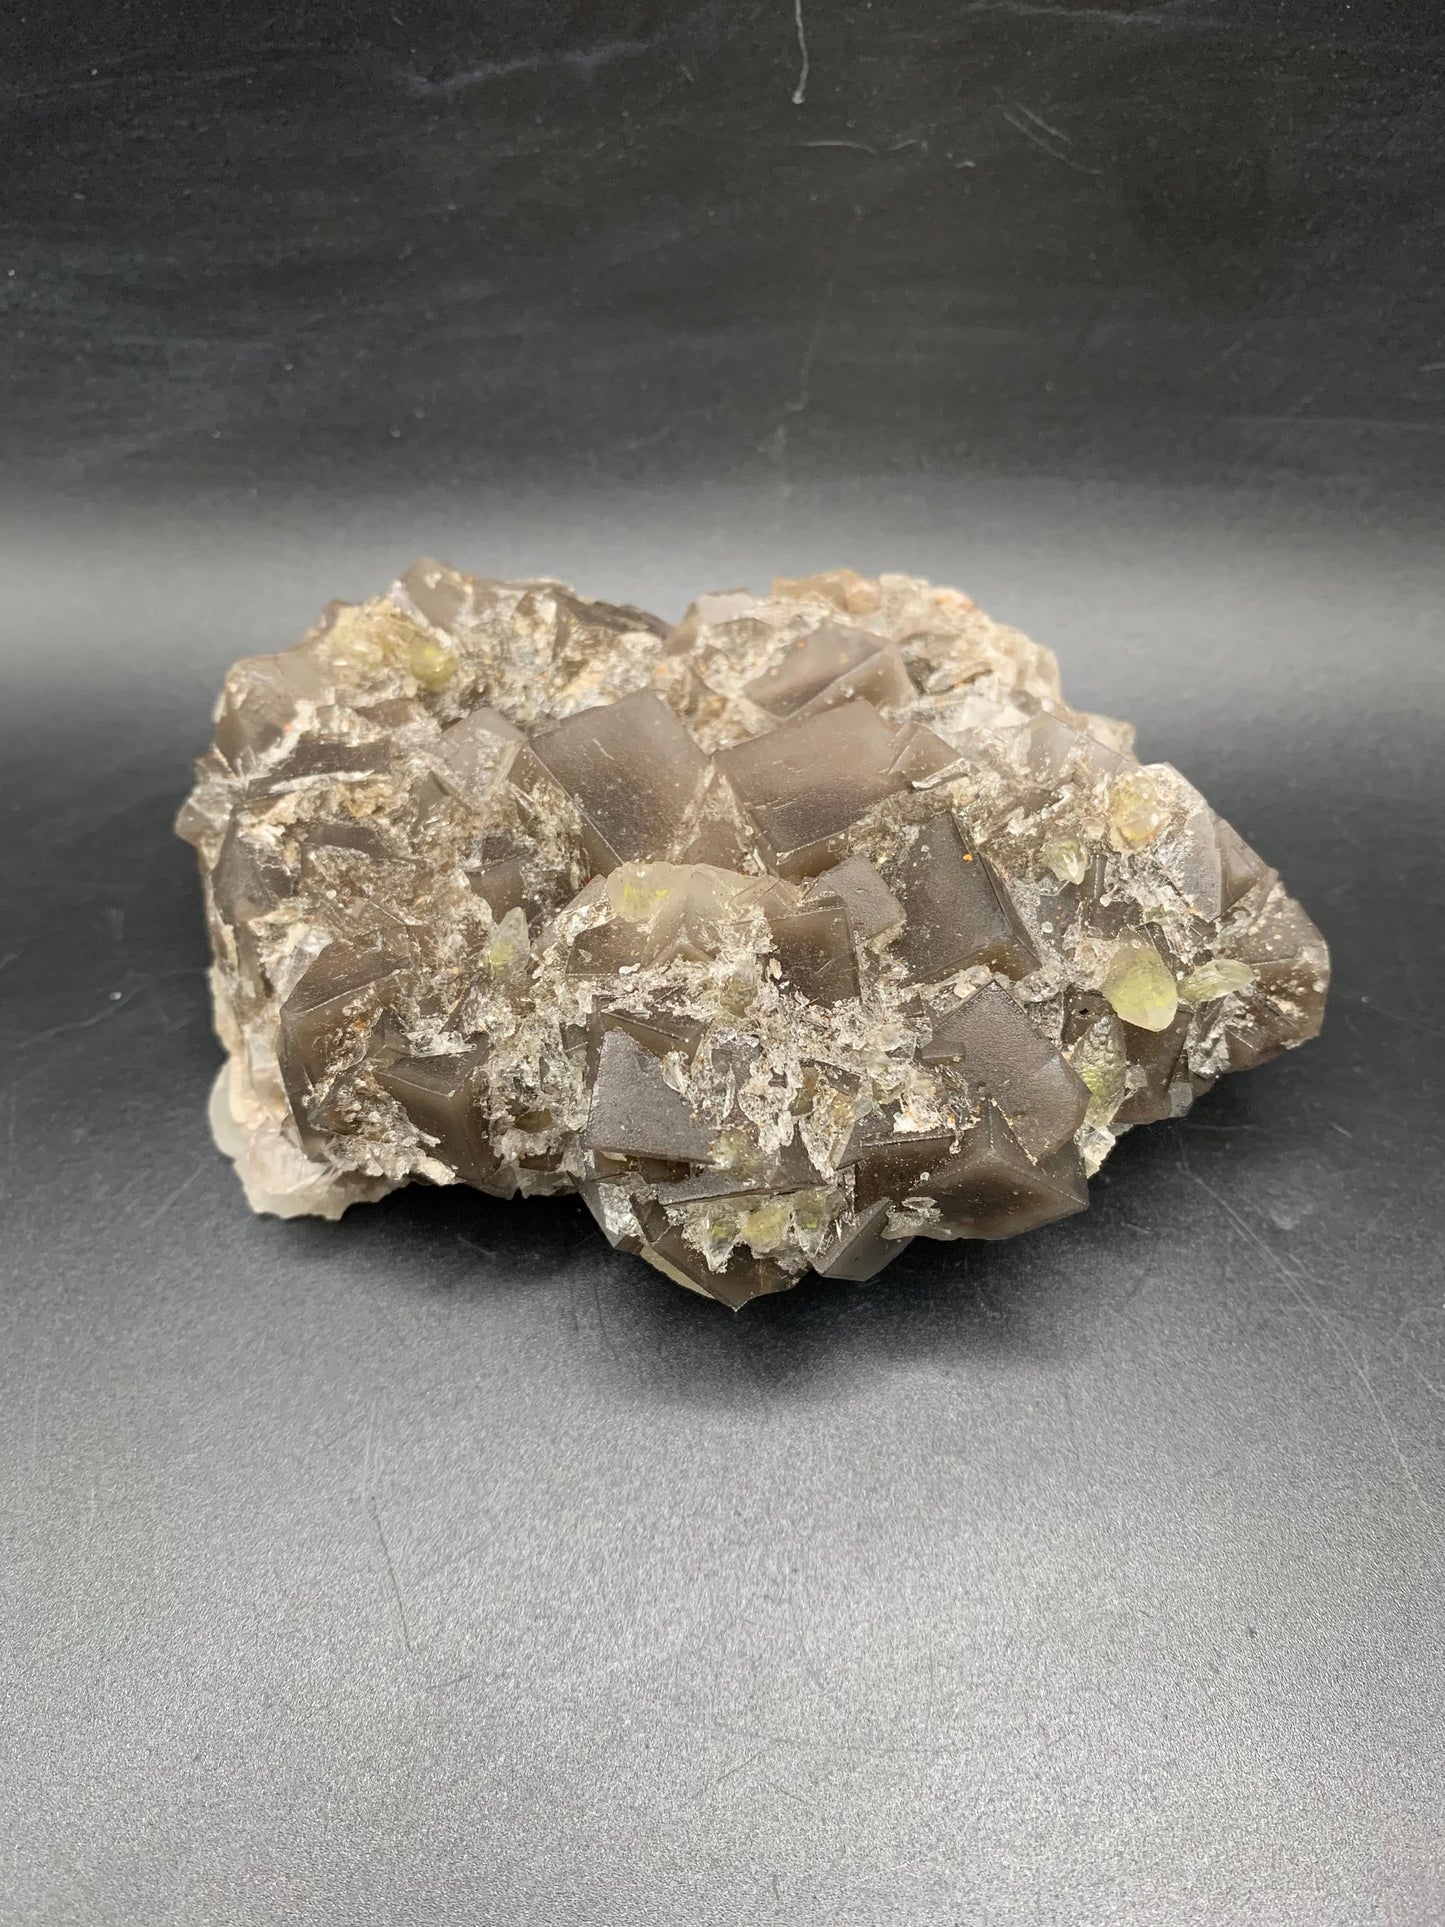 Fascinating Fluorite and Calcite